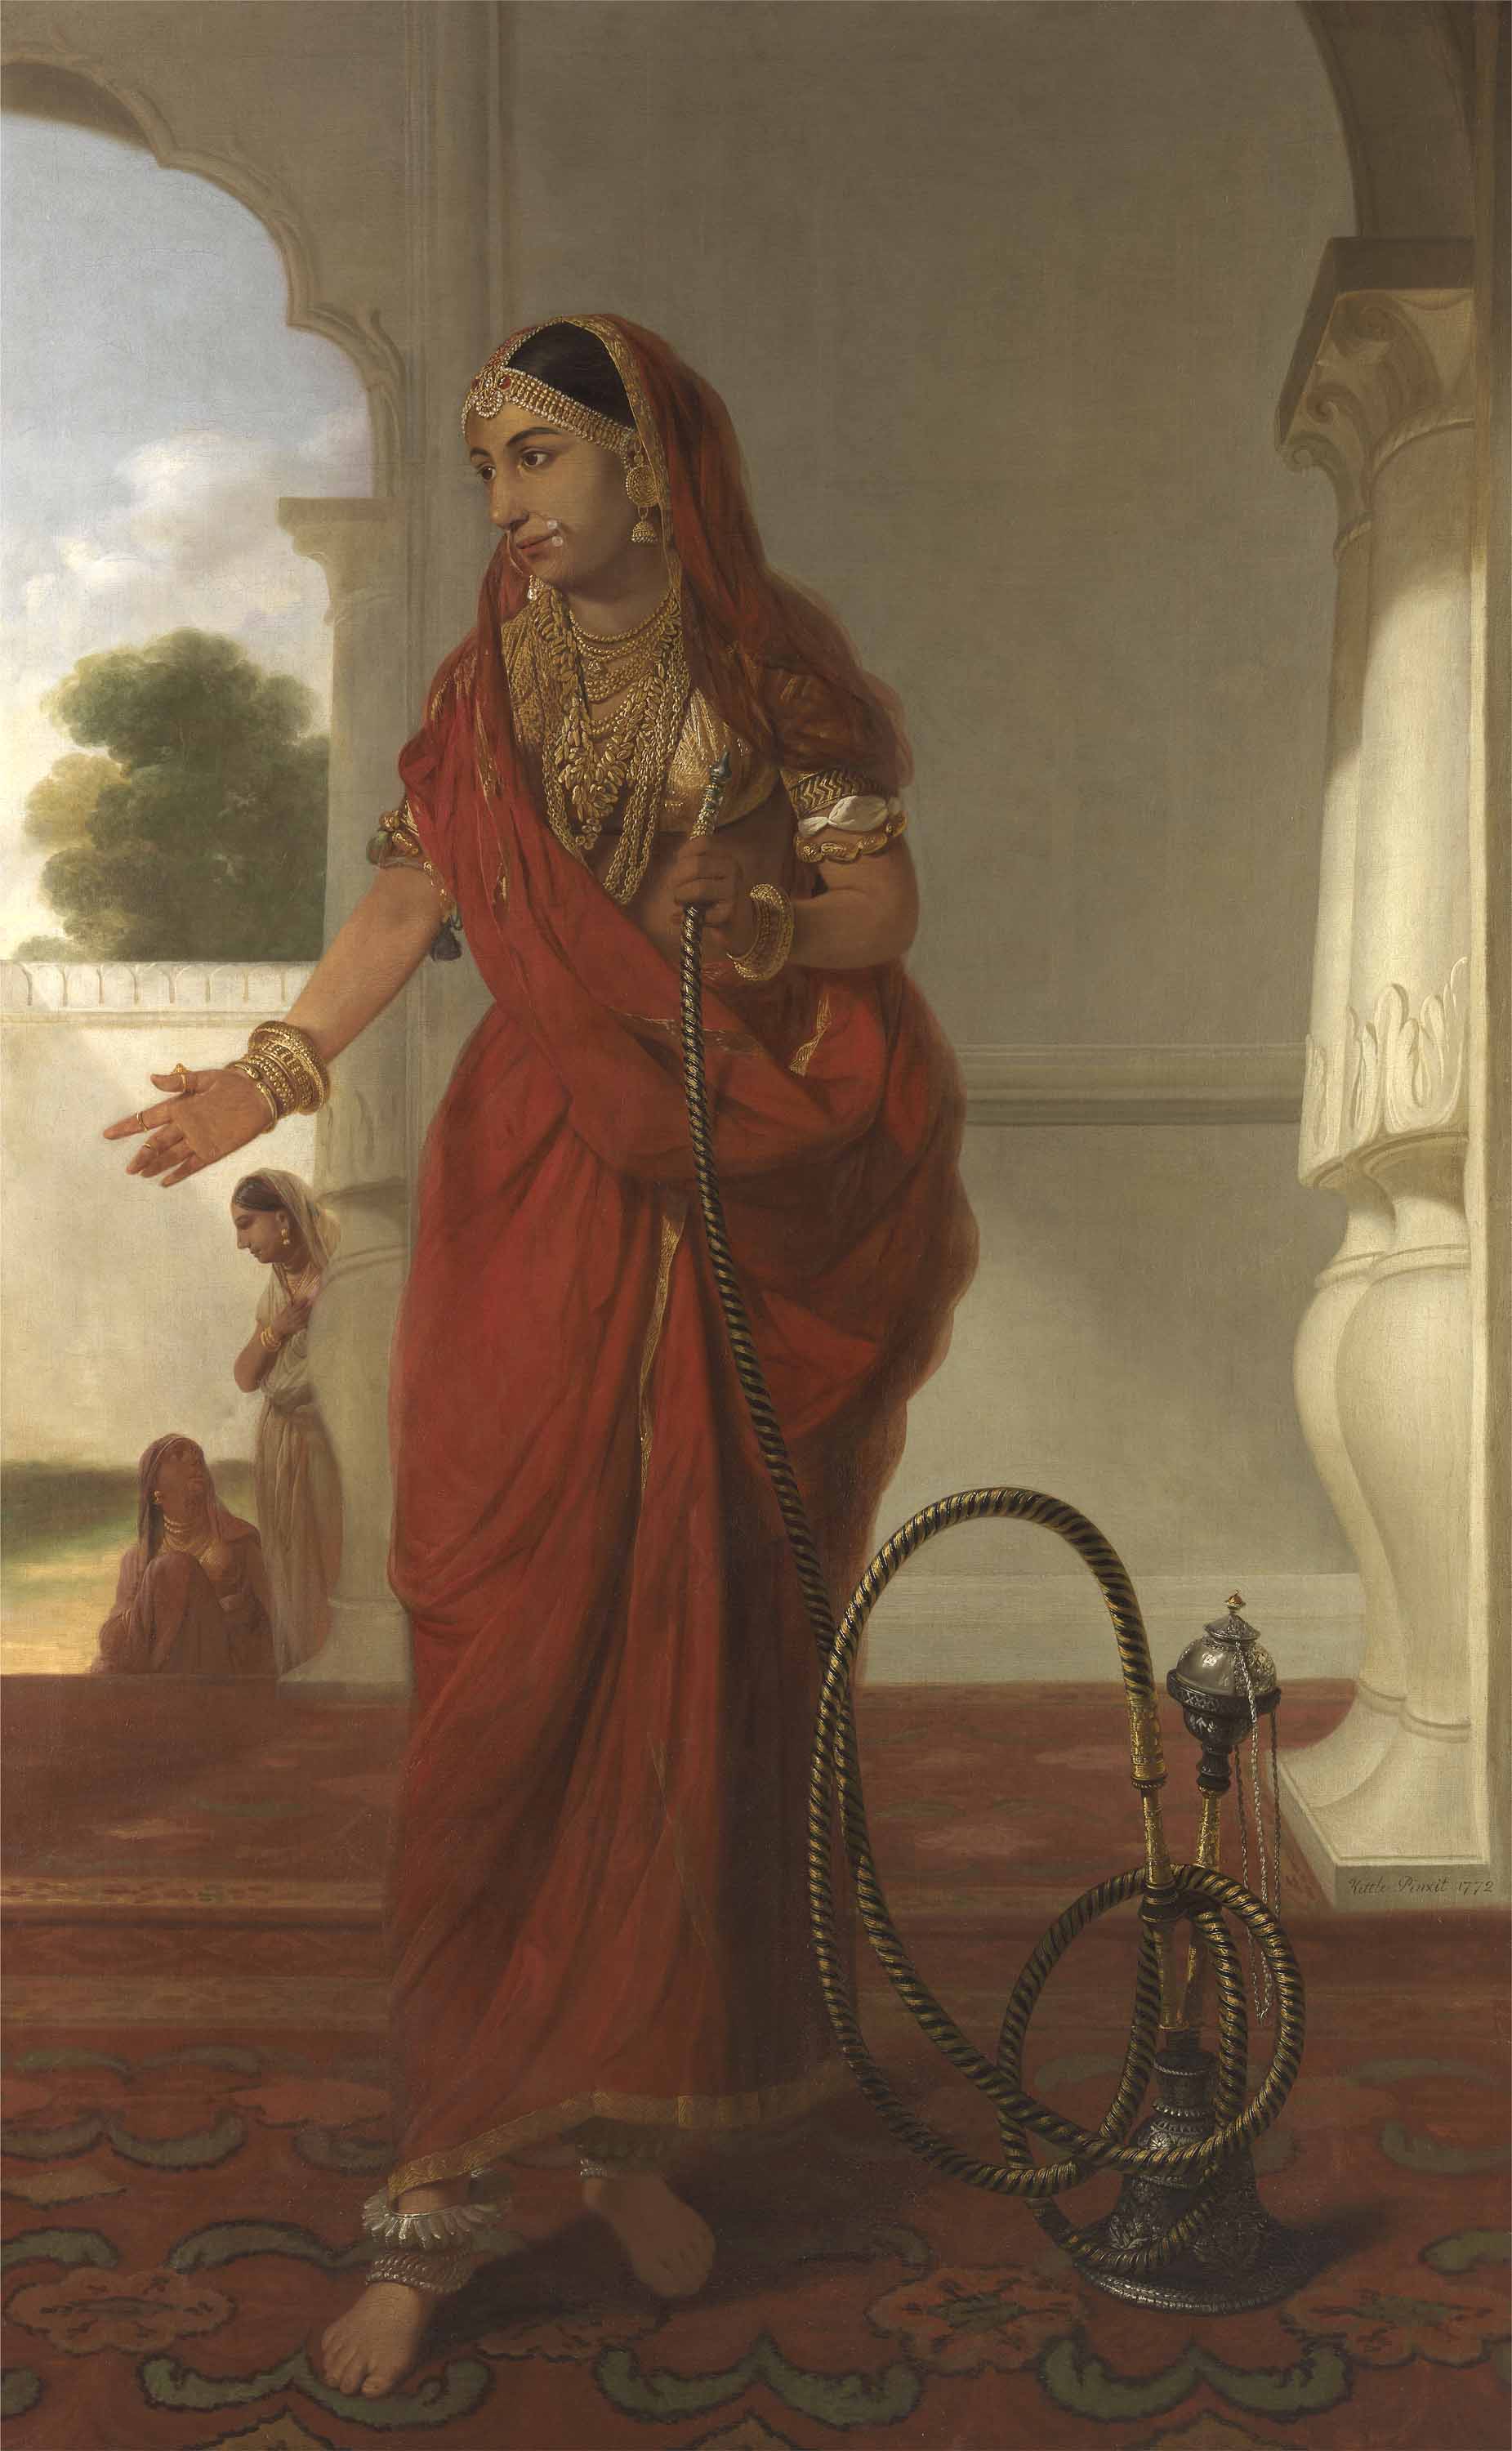 Dancing Girl or An Indian Dancing Girl with a Hookah